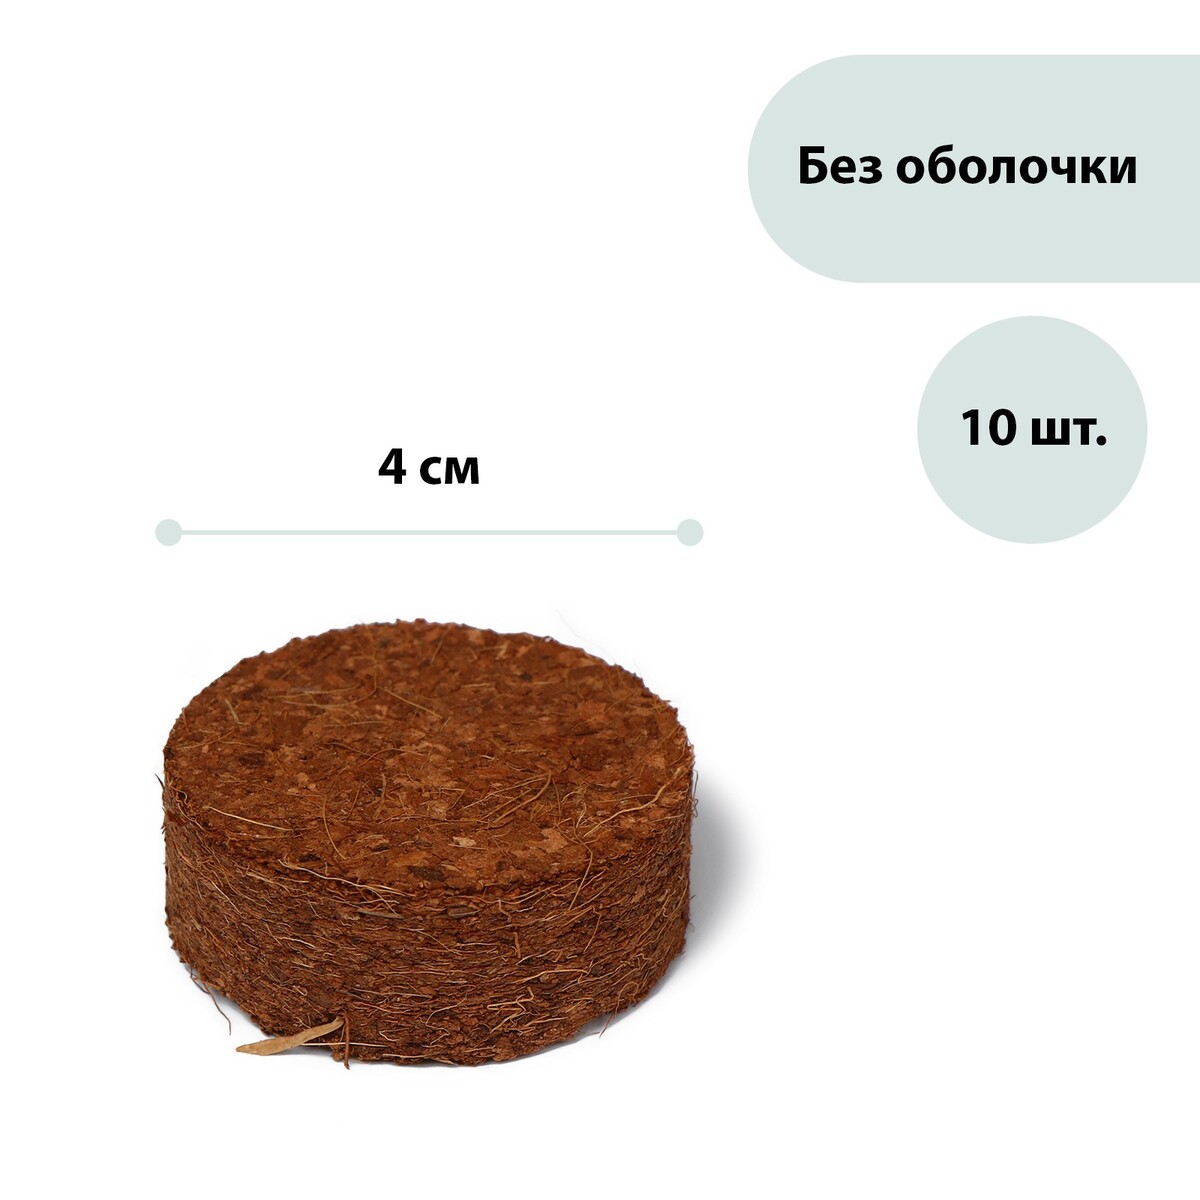 Таблетки кокосовые, d = 4 см, без оболочки, набор 10 шт., greengo бруфен ср таблетки 800мг 28